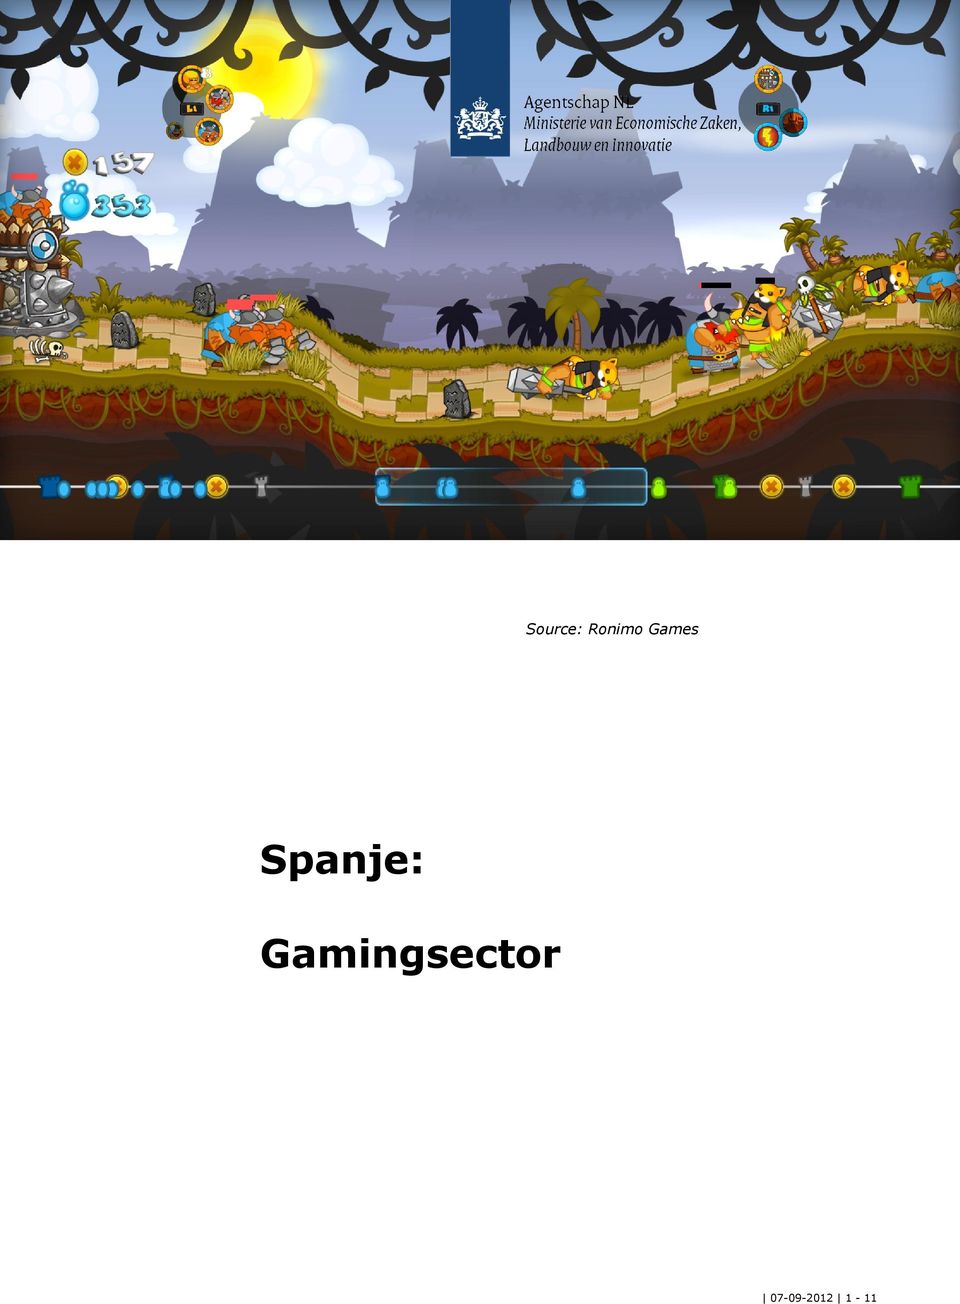 Gamingsector